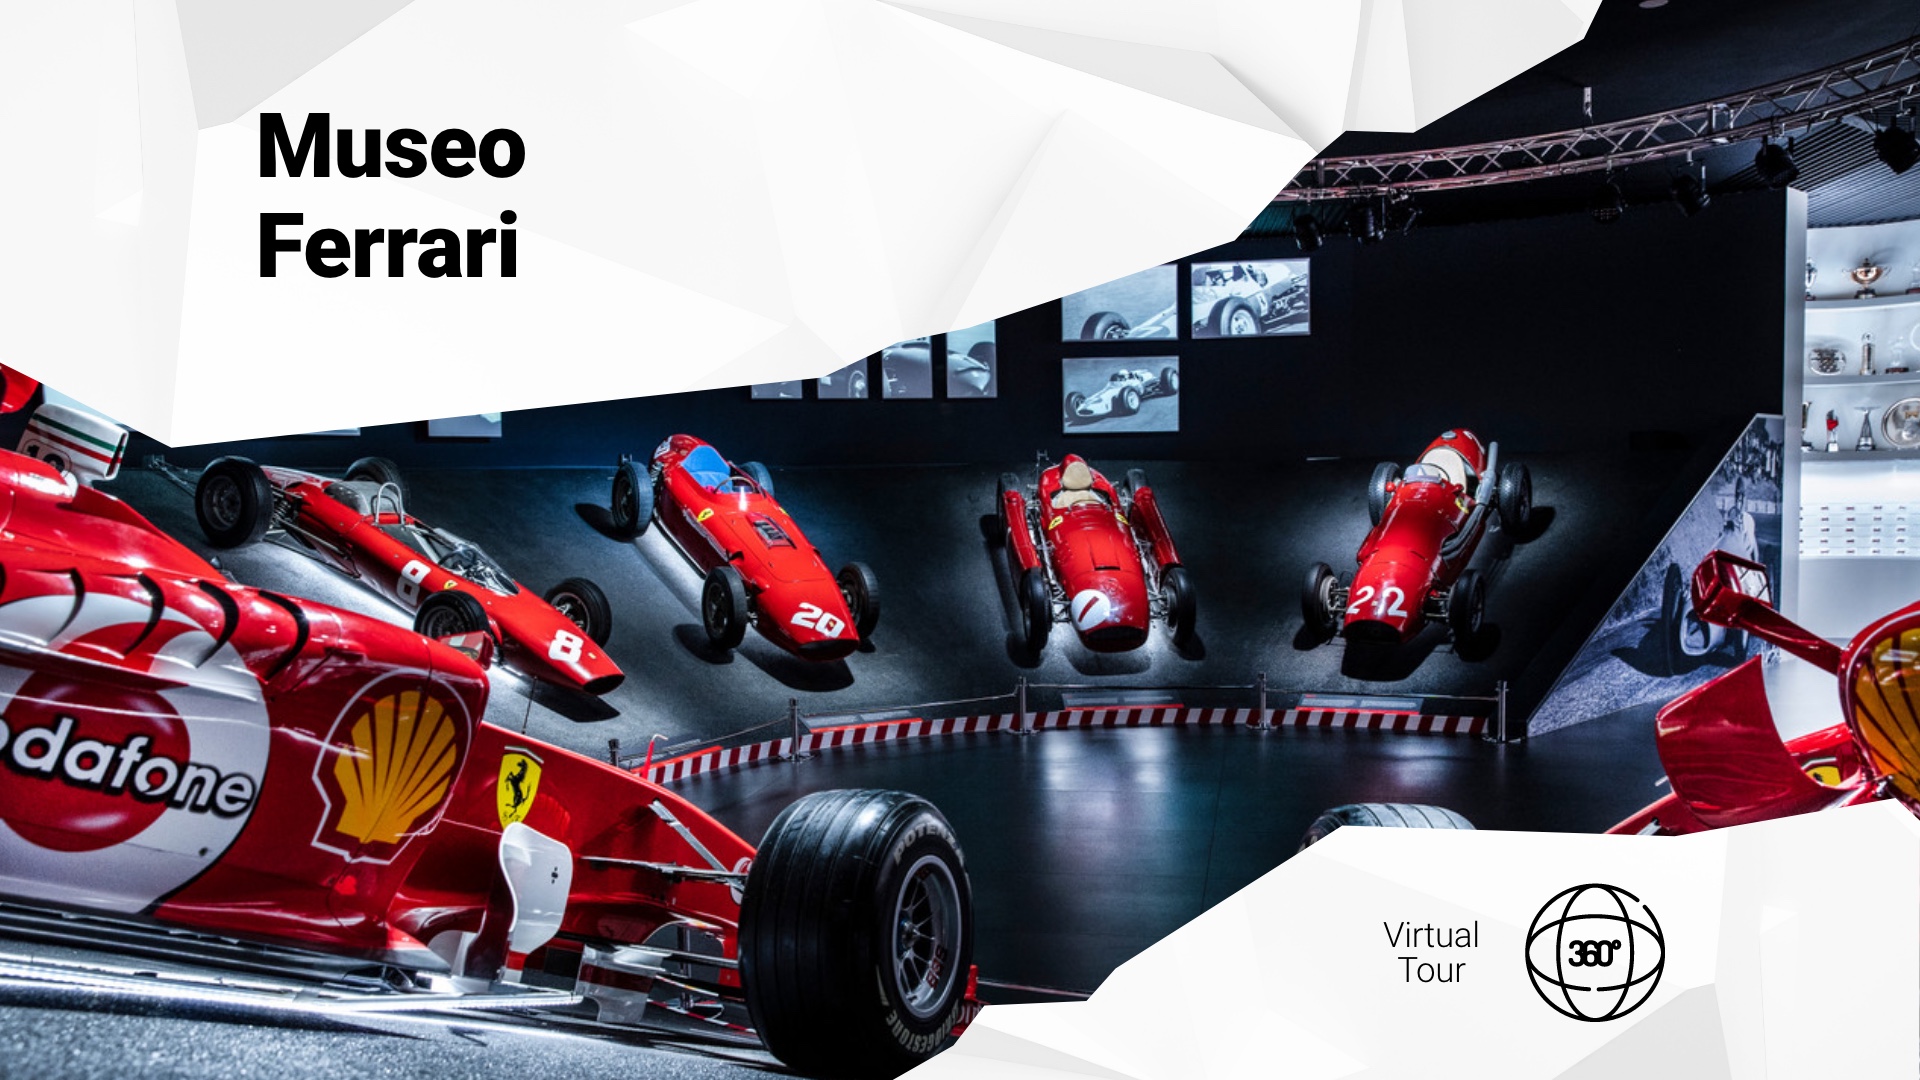 Motor Valley virtual tour: visit the Ferrari Museum.